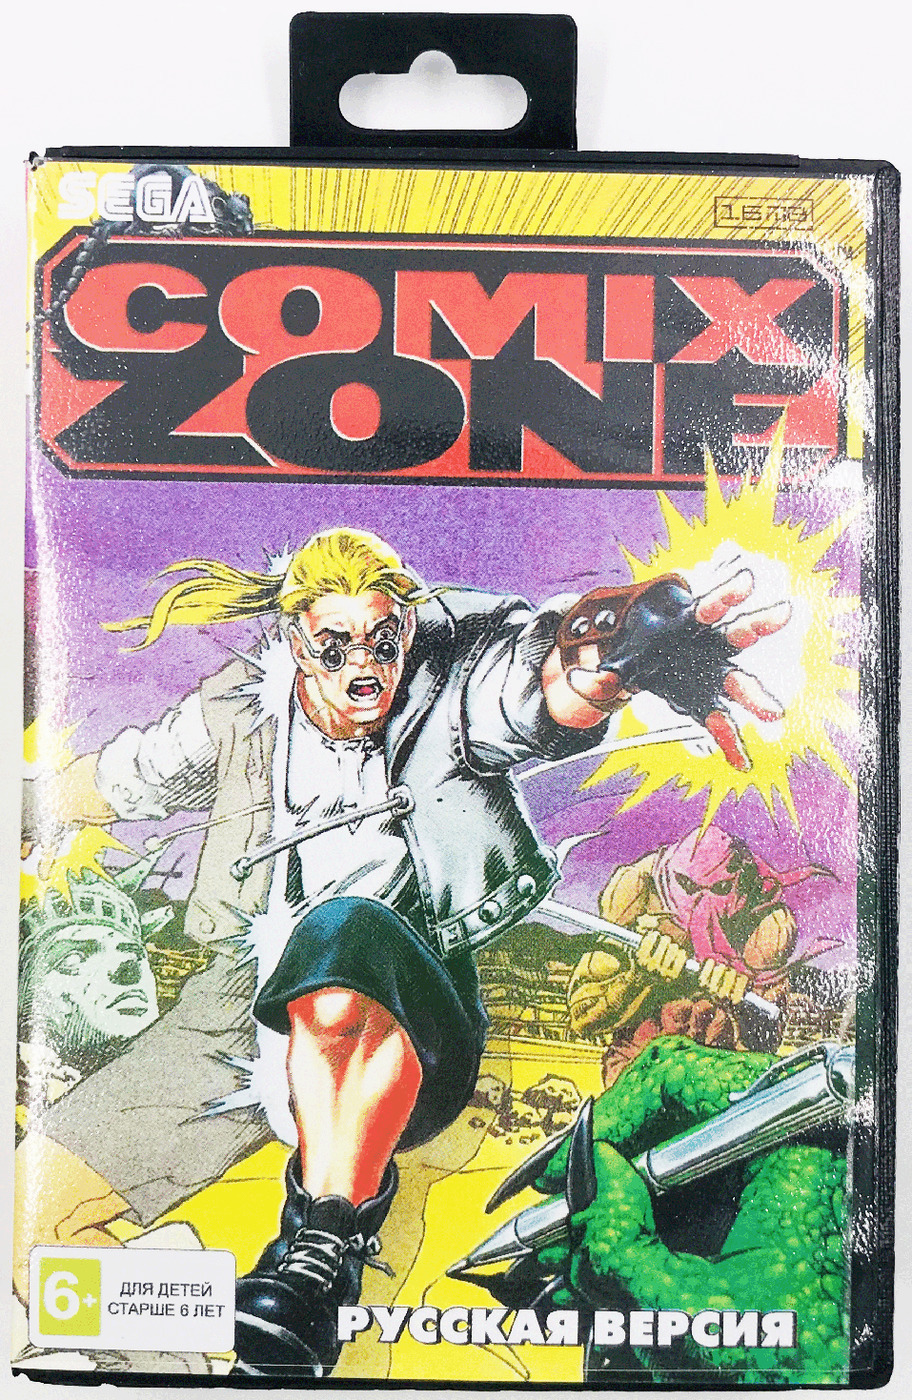 Comix zone отзывы. Comix Zone картридж сега. Comics Zone игра. Игра комикс зона сега. Comix Zone комикс.